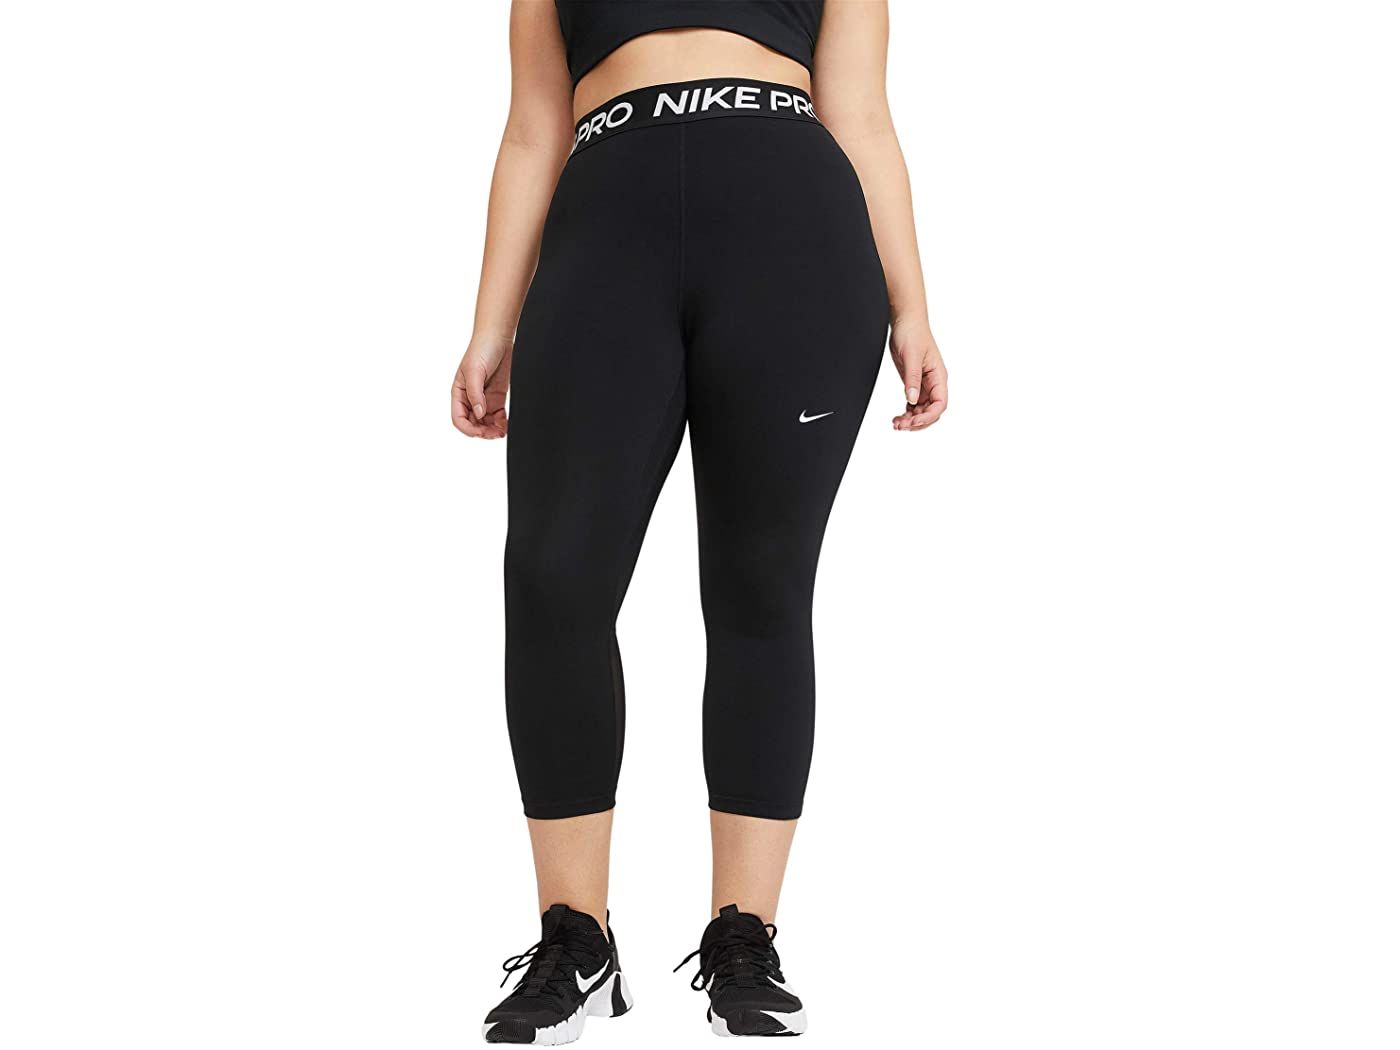 Buy > nike pro leggings pink band > in stock